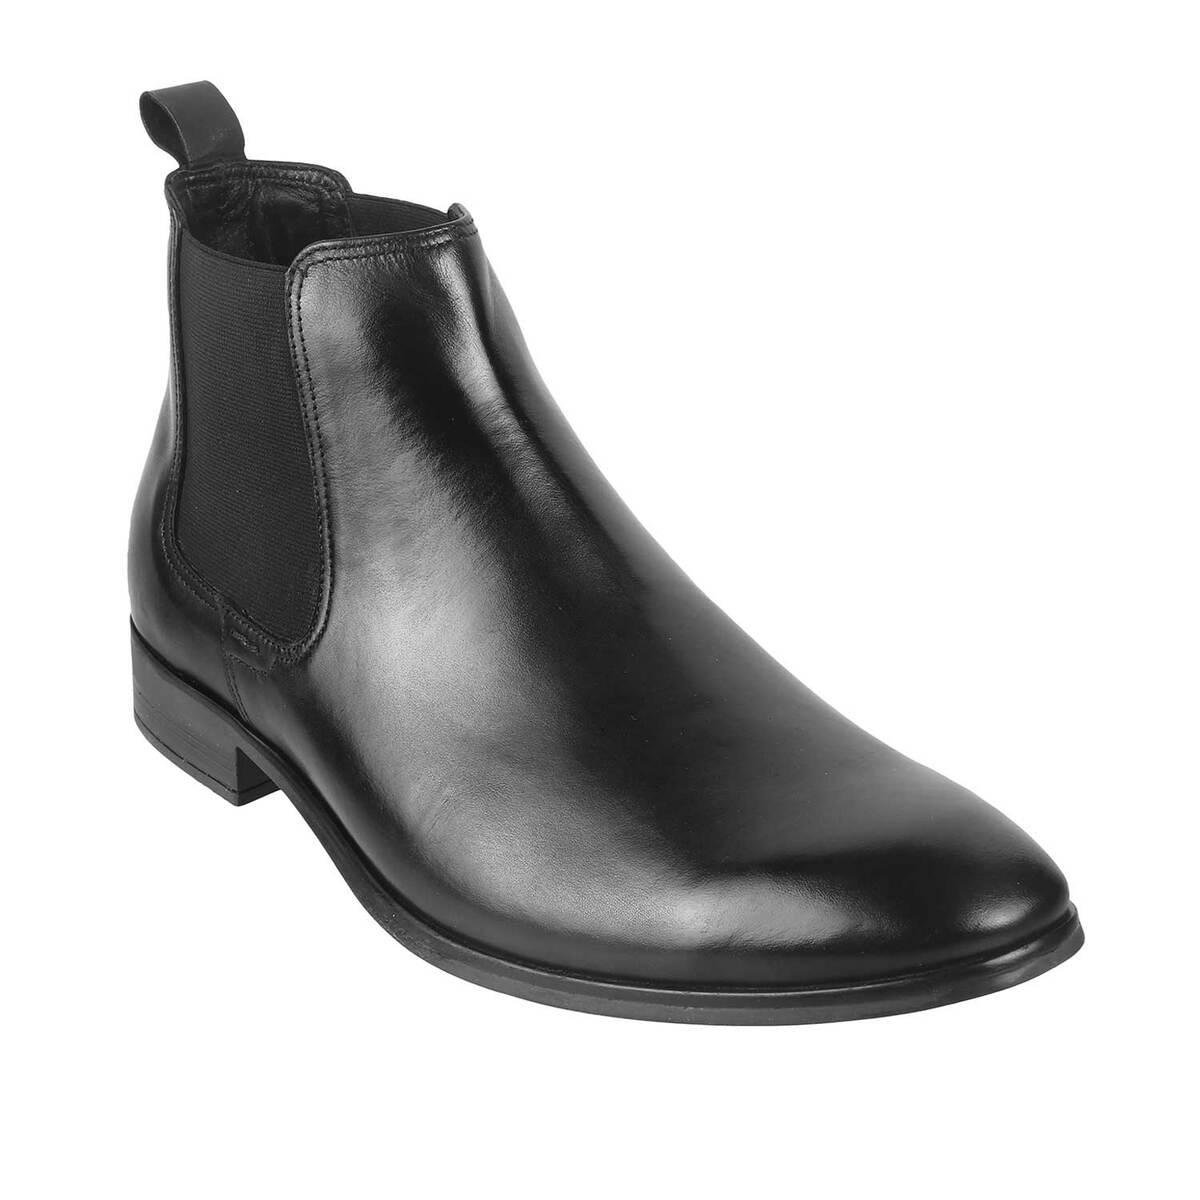 Buy Metro Men Black Formal Boots Online | SKU: 19-6440-11-40 - Metro Shoes